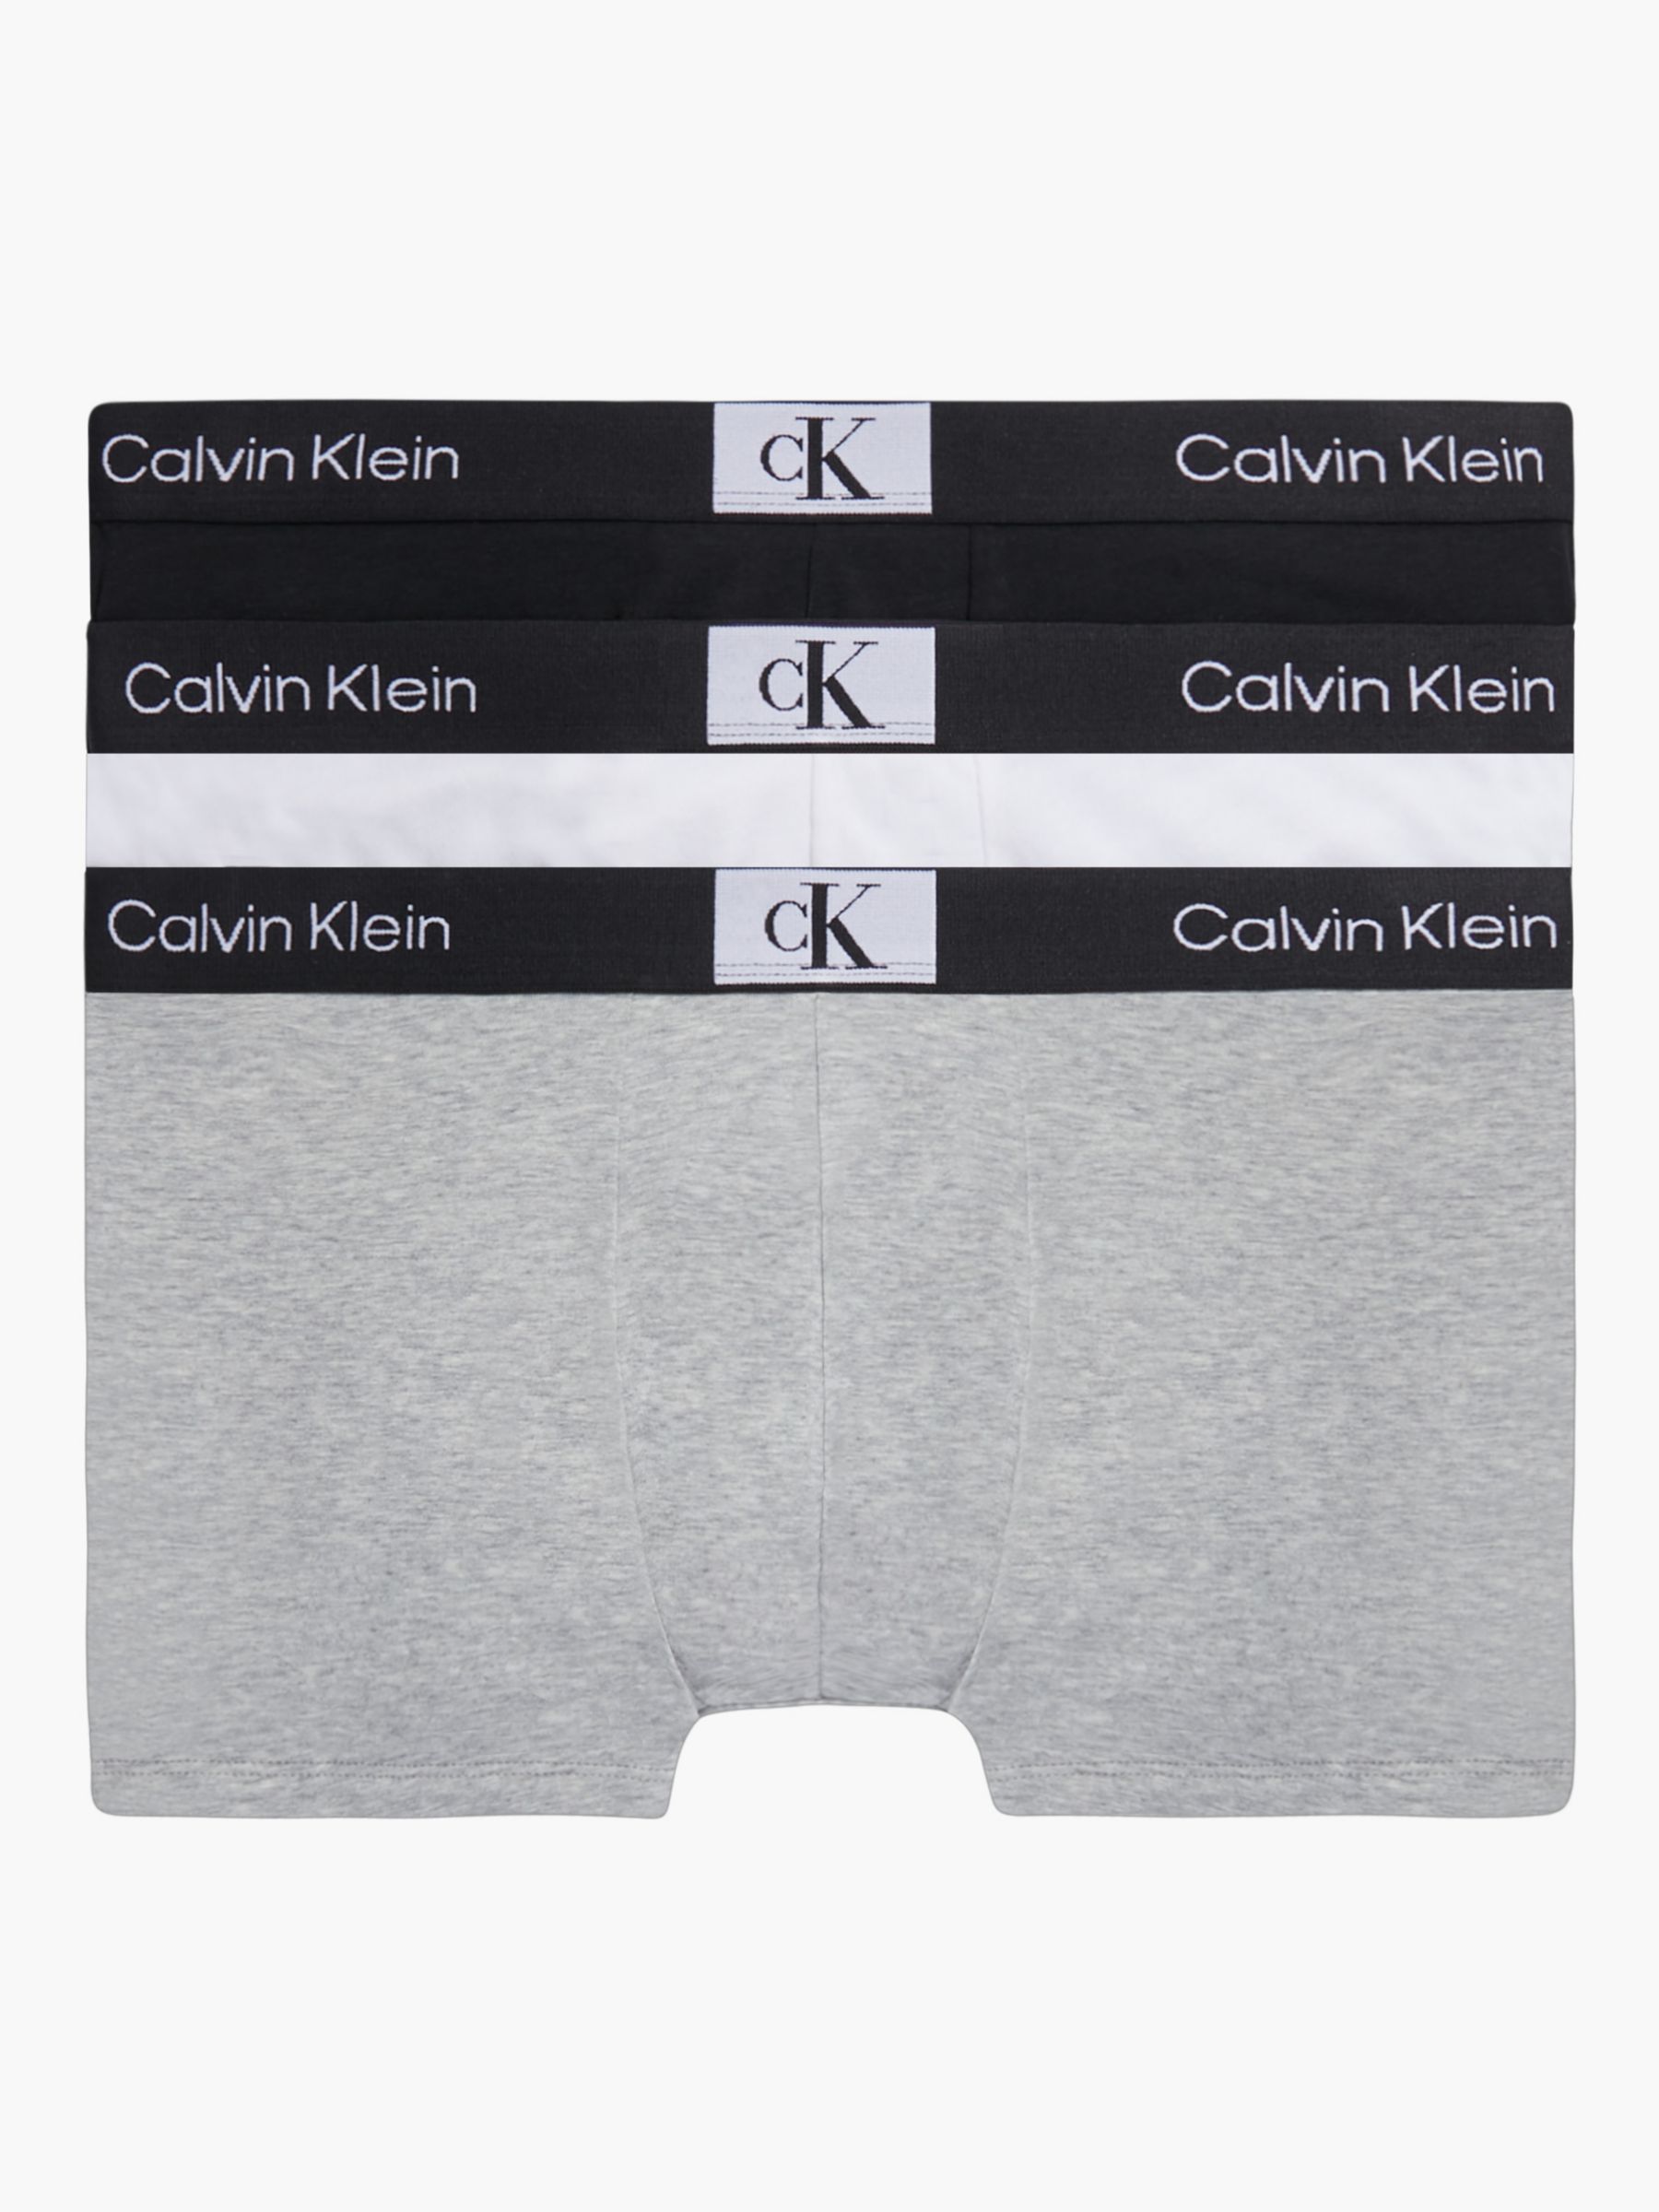 Calvin Klein Regular Cotton Stretch Trunks, Pack of 3, Black/White at John  Lewis & Partners